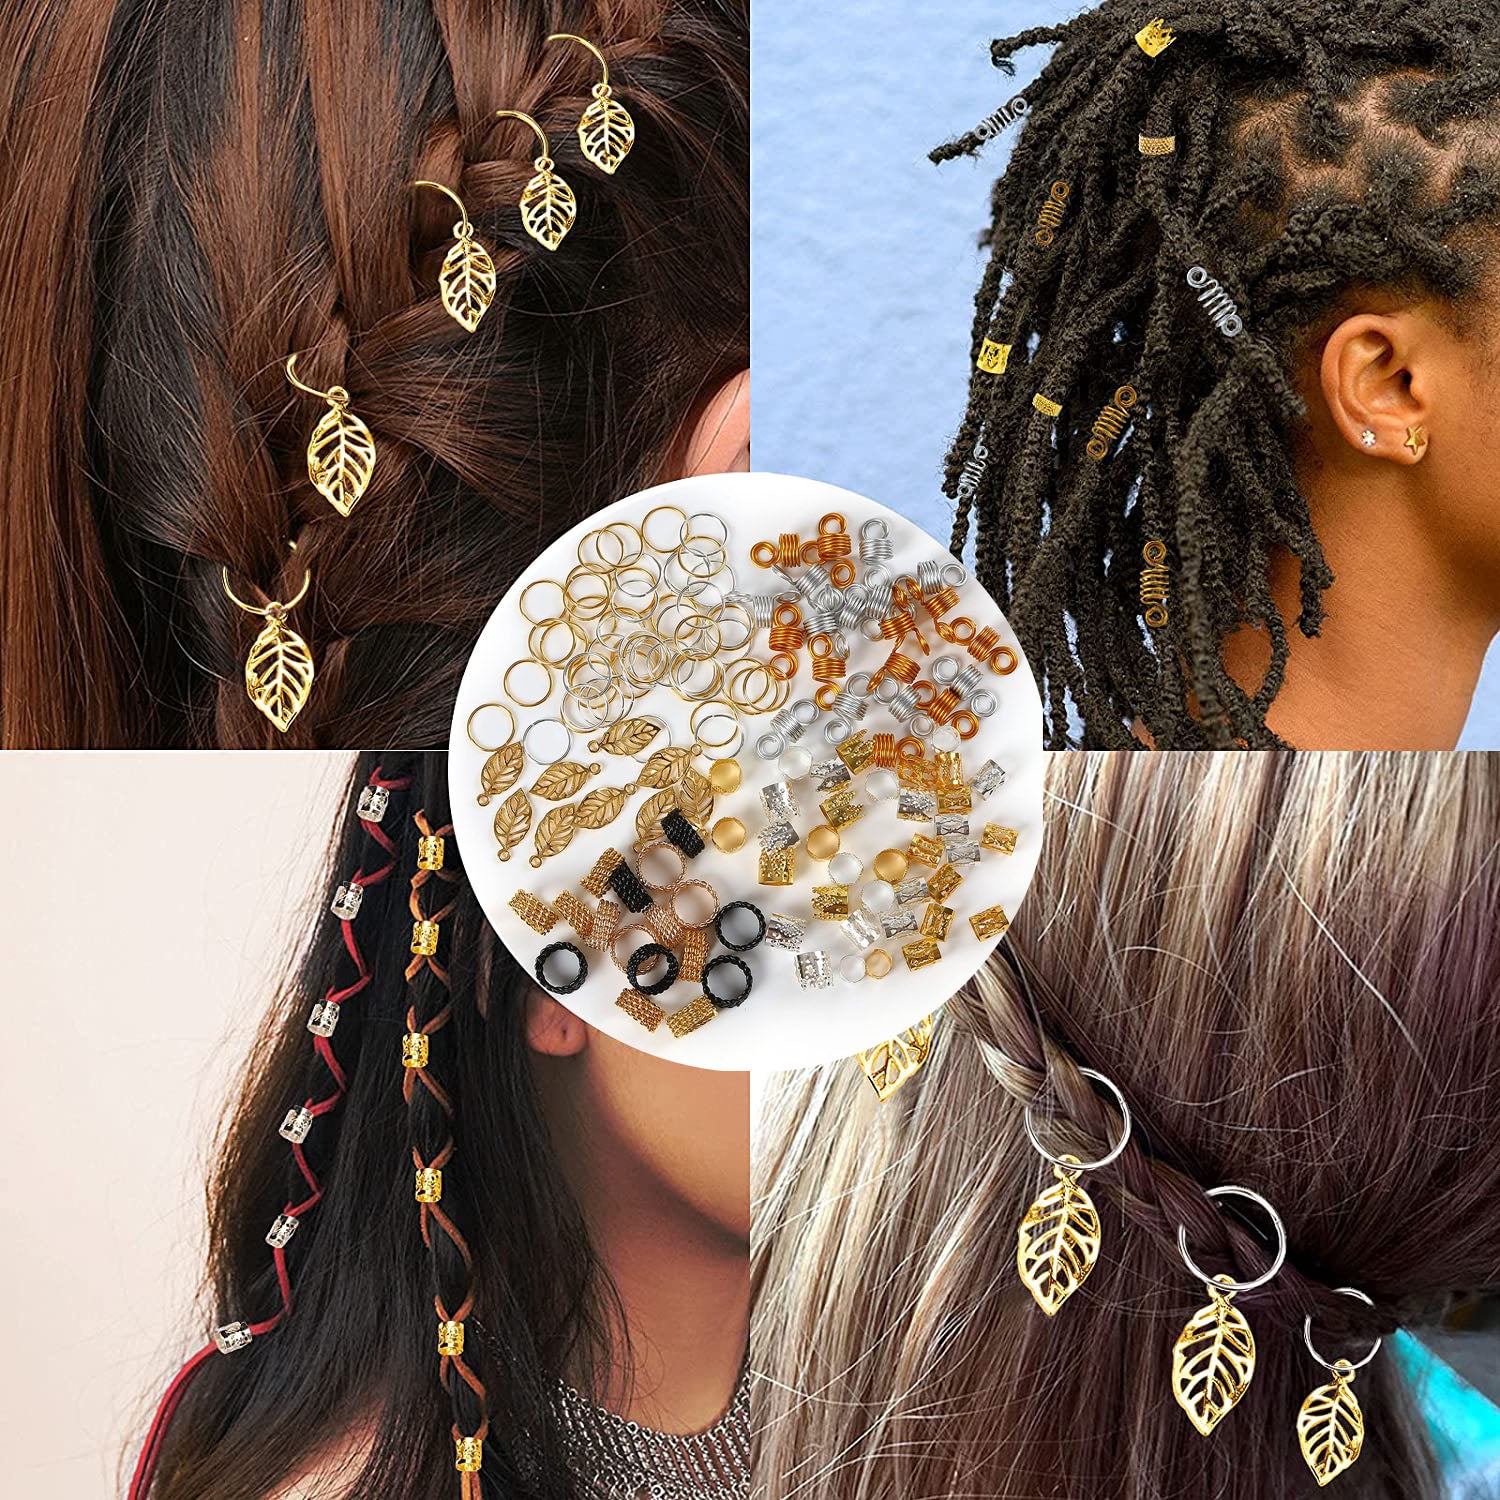 Hair Rings - decorate hair rings & hair beads in multiple colors - for set  hair, braids or dreadlocks - 100 pcs